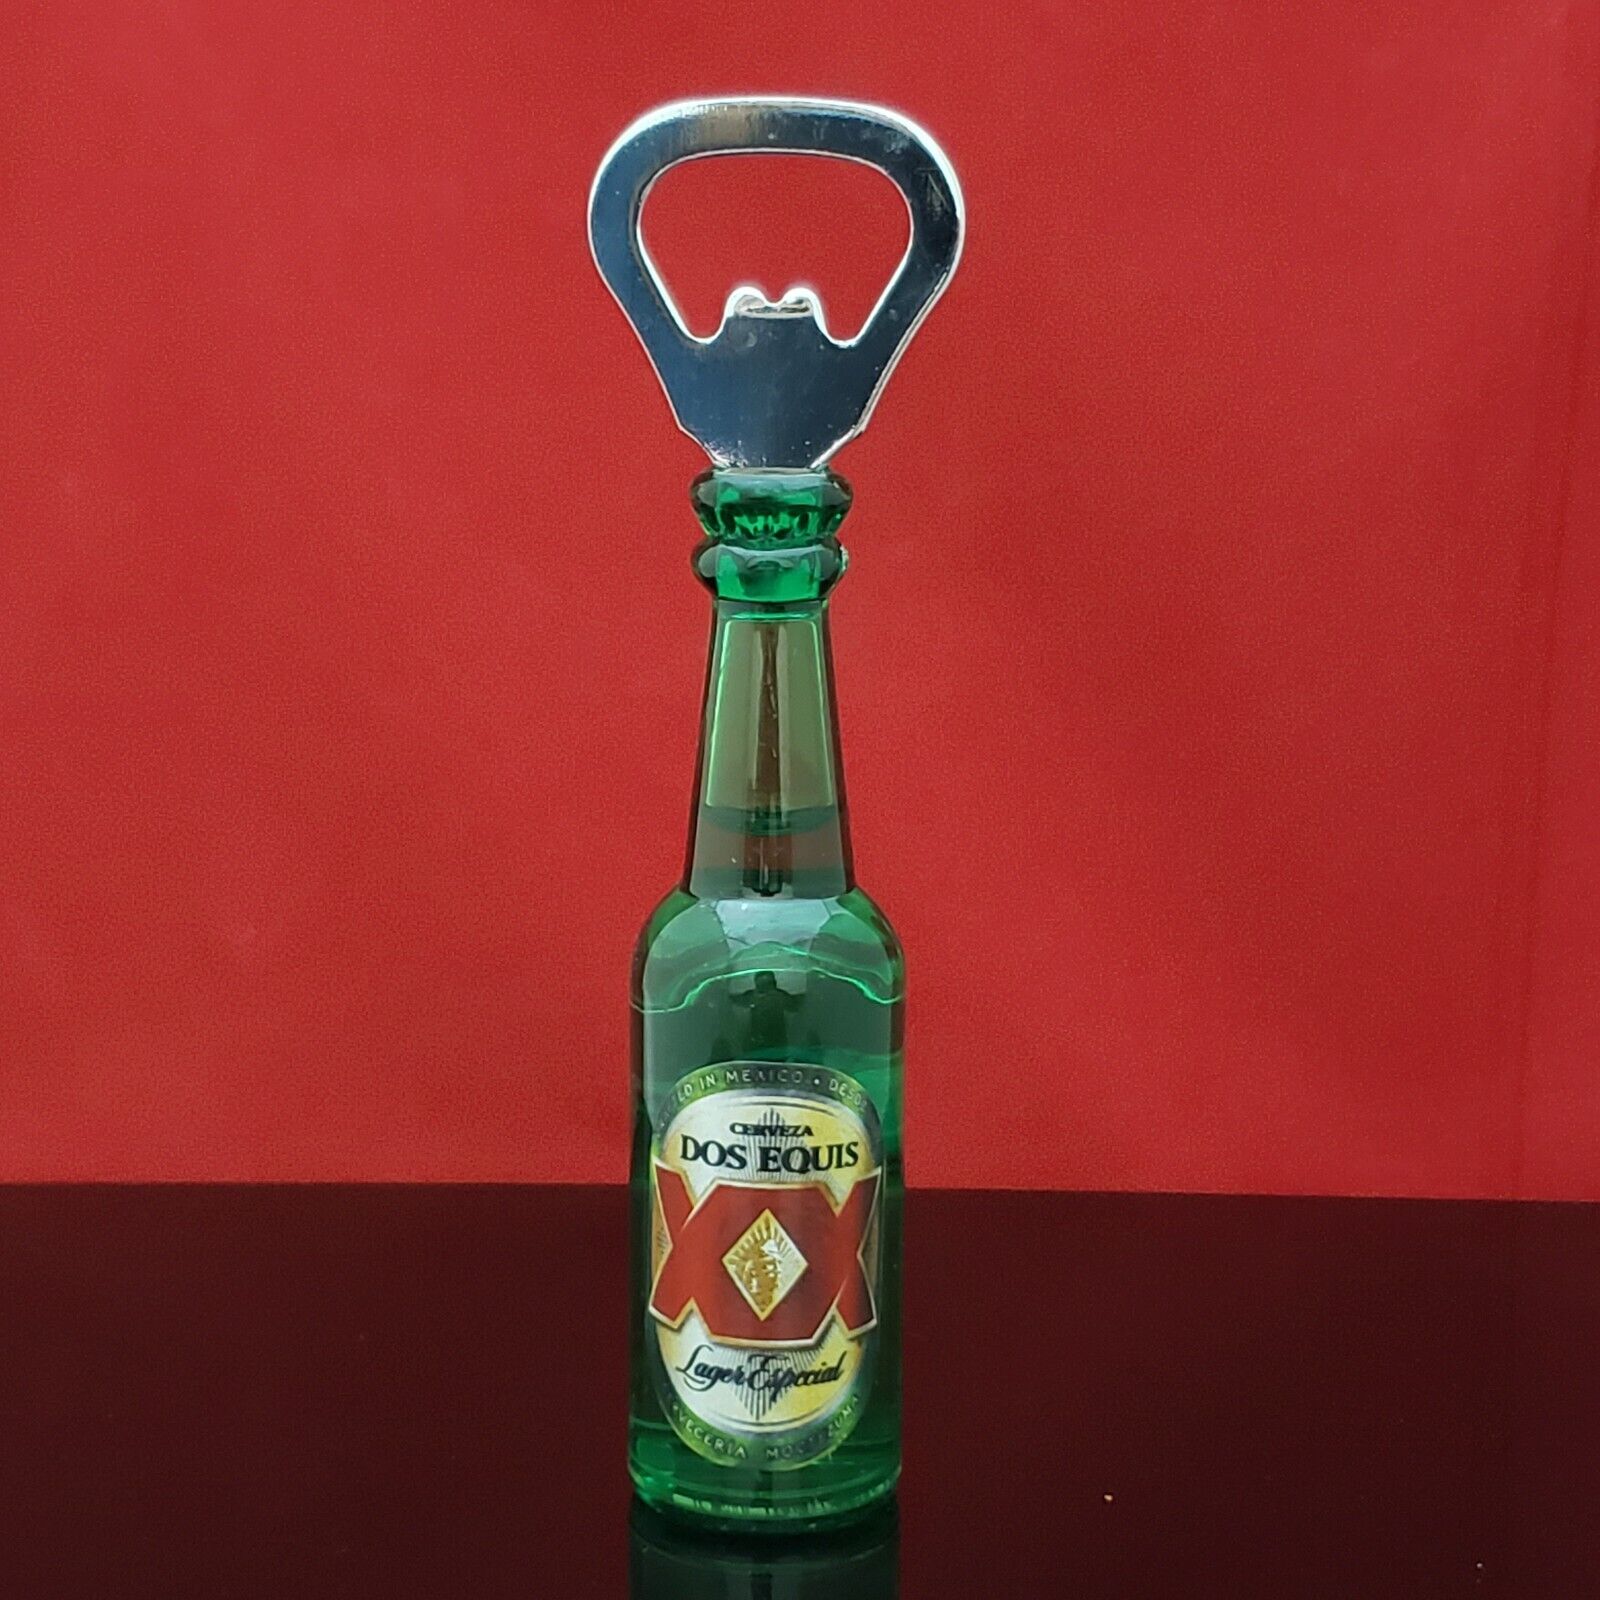 Bottle Opener Dos Equis Beer Small novelty gift drinker gag